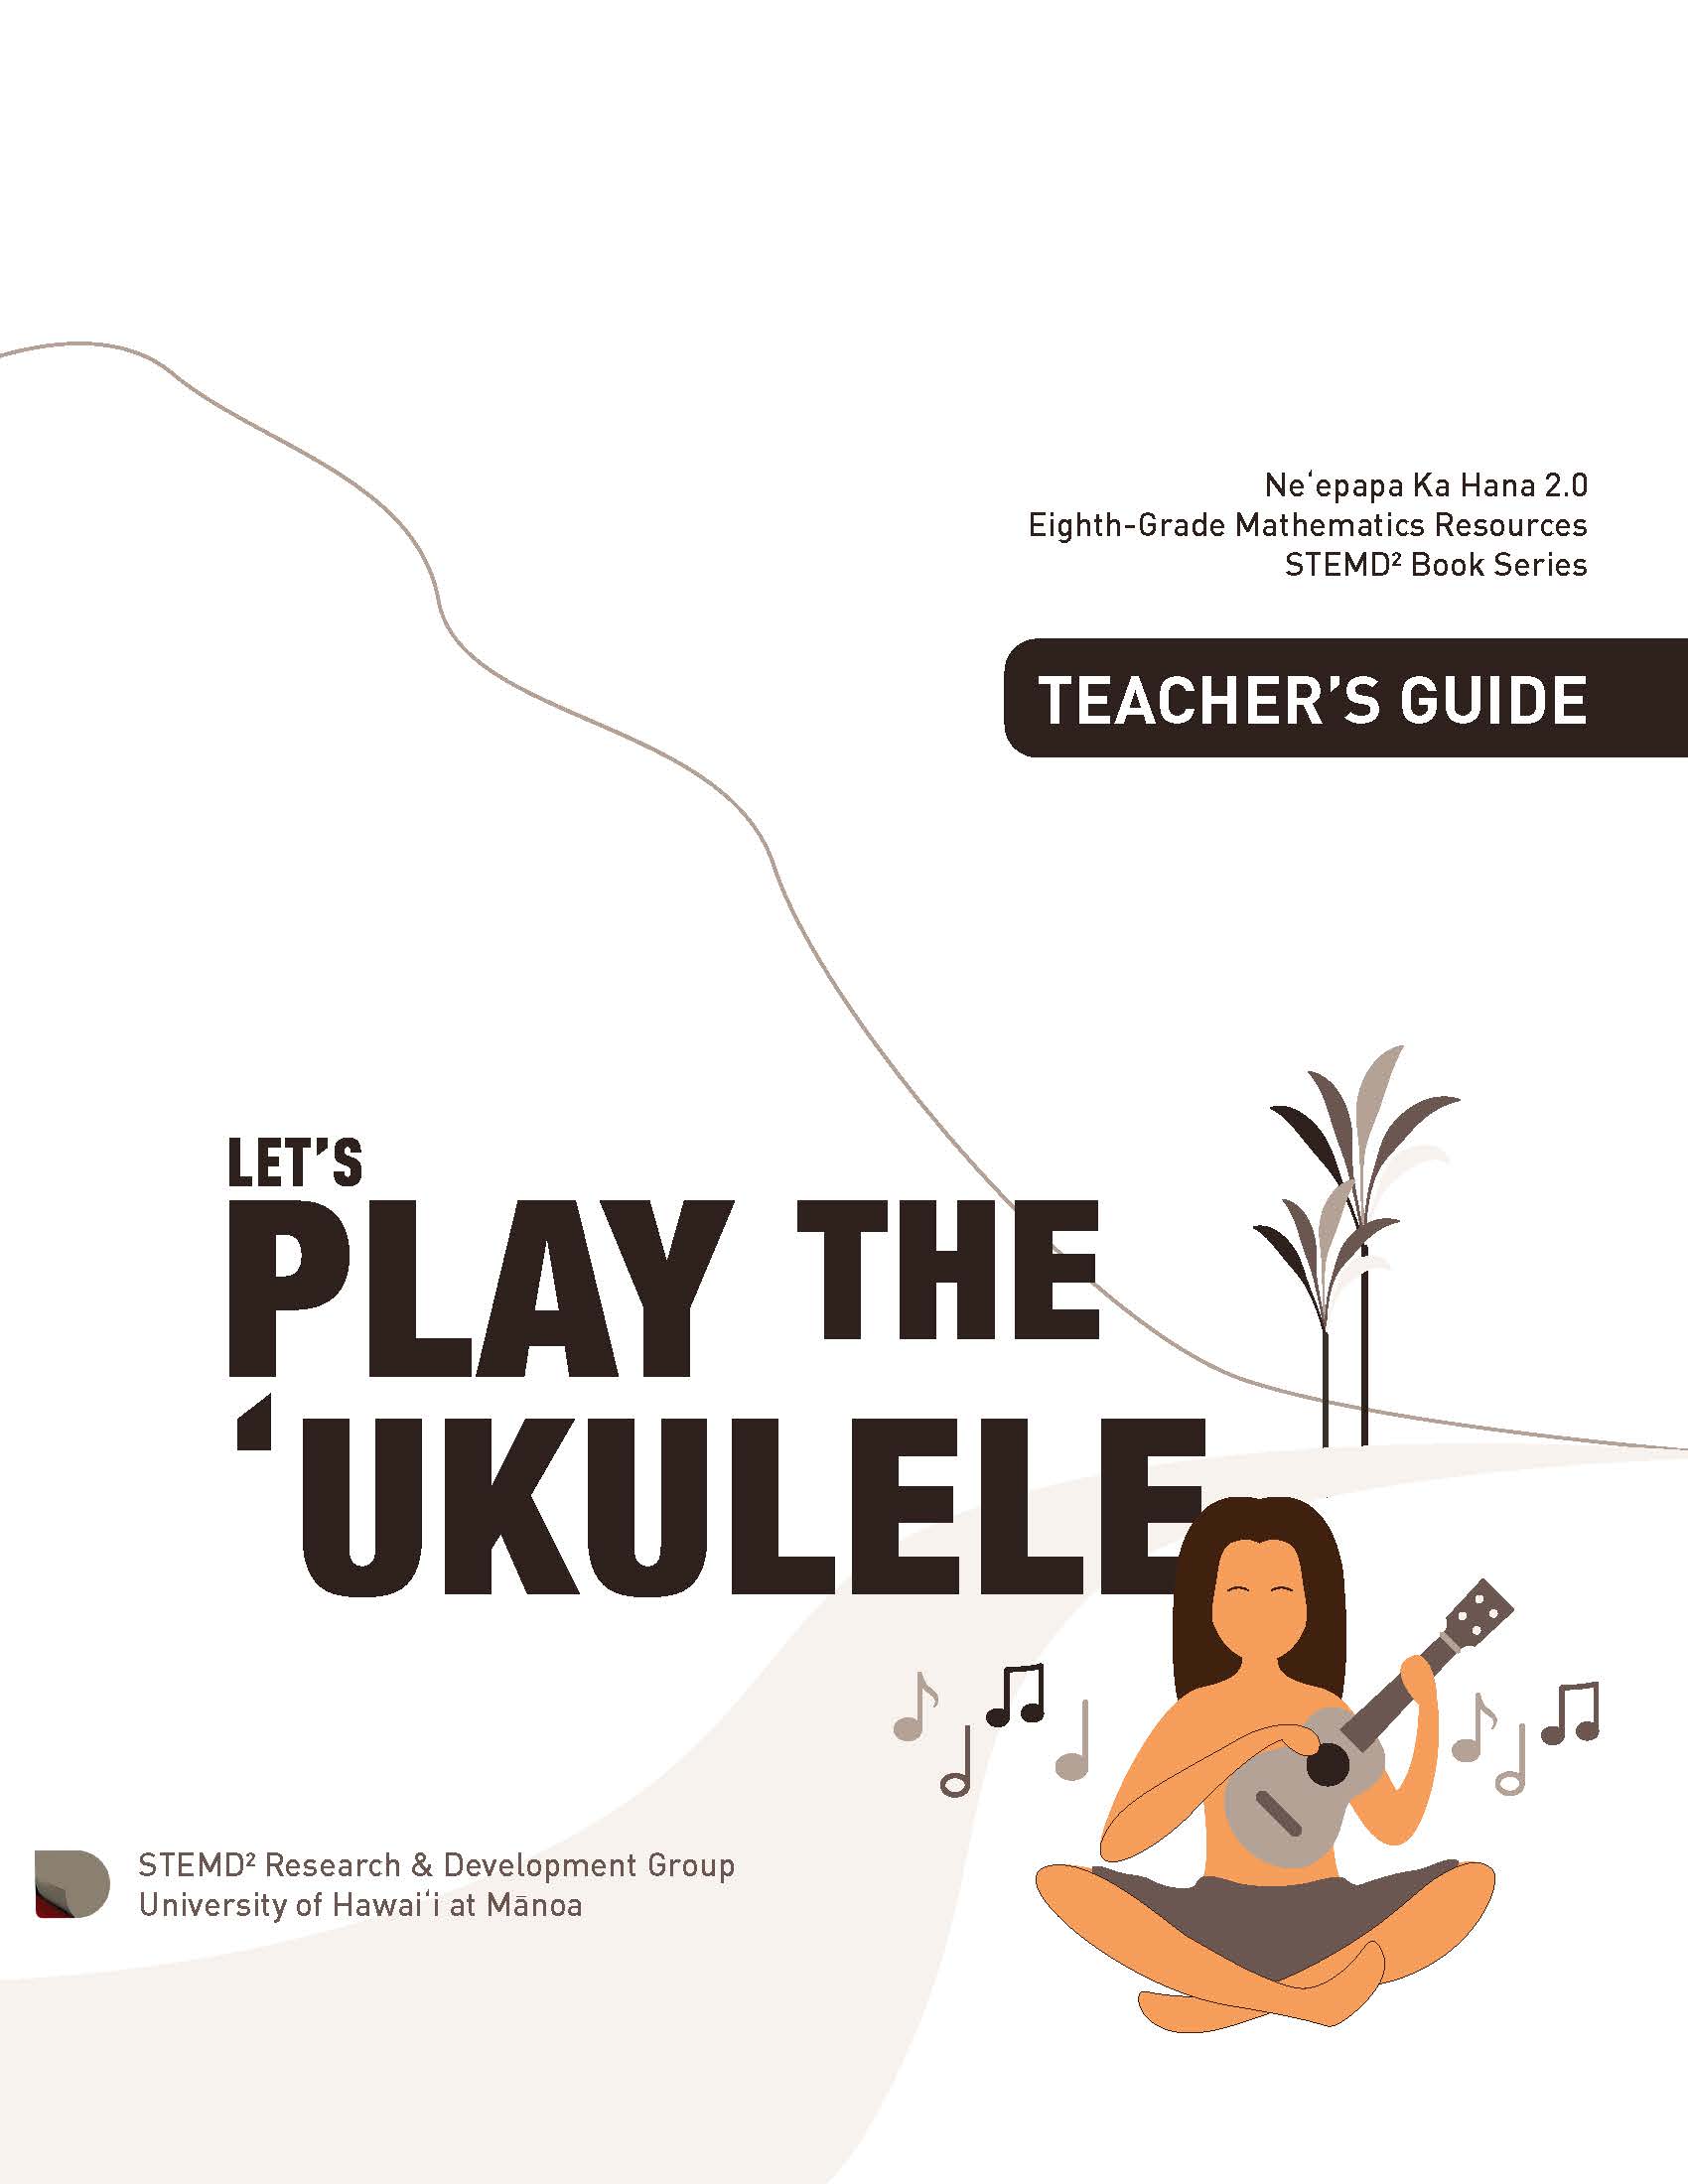 the cover of the 8th grade ukulele teacher book.